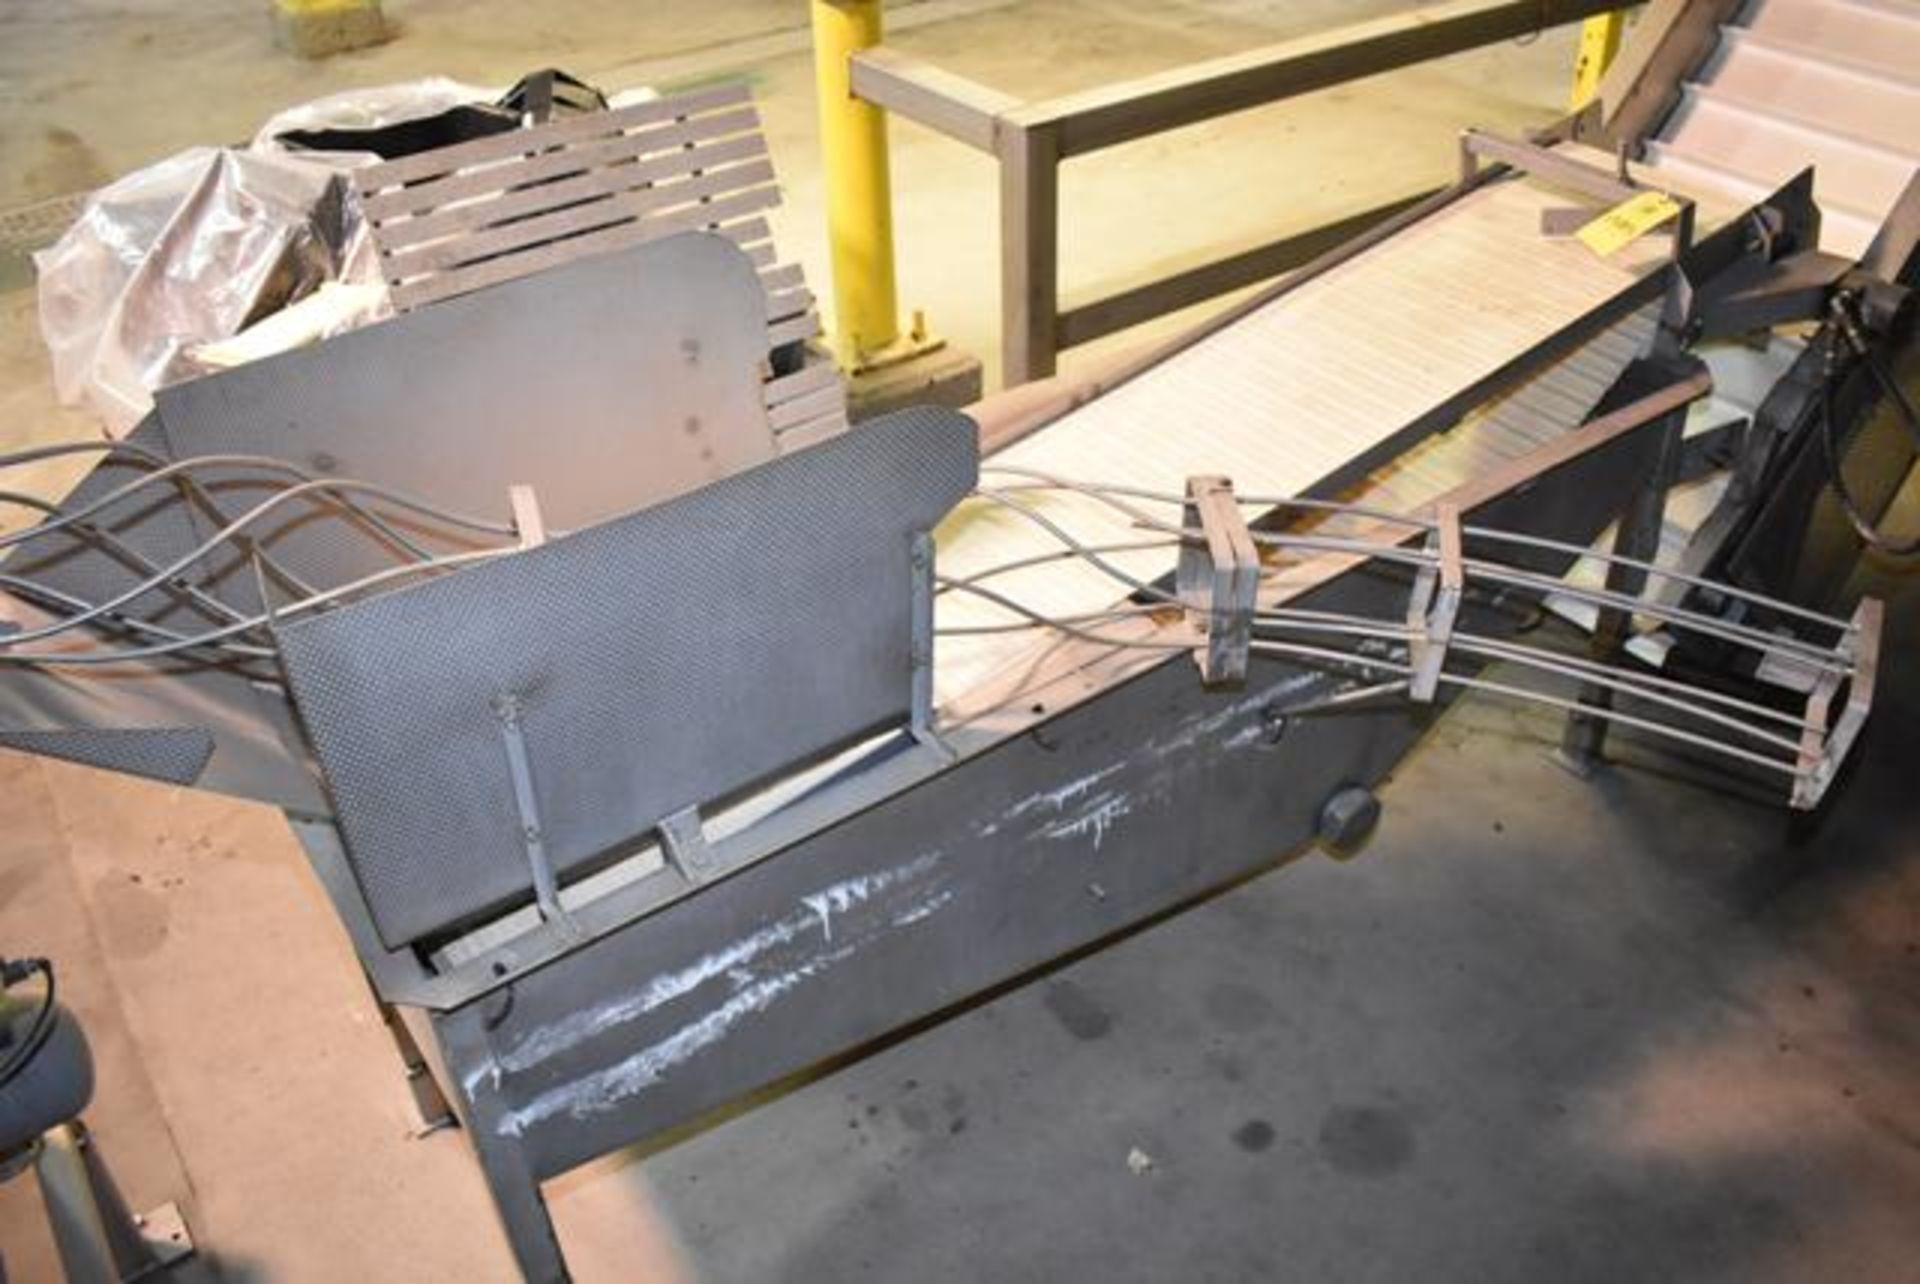 Stainless Steel Process Tank, 18" Wide Belt Conveyor x 8' Length, RIGGING FEE $300